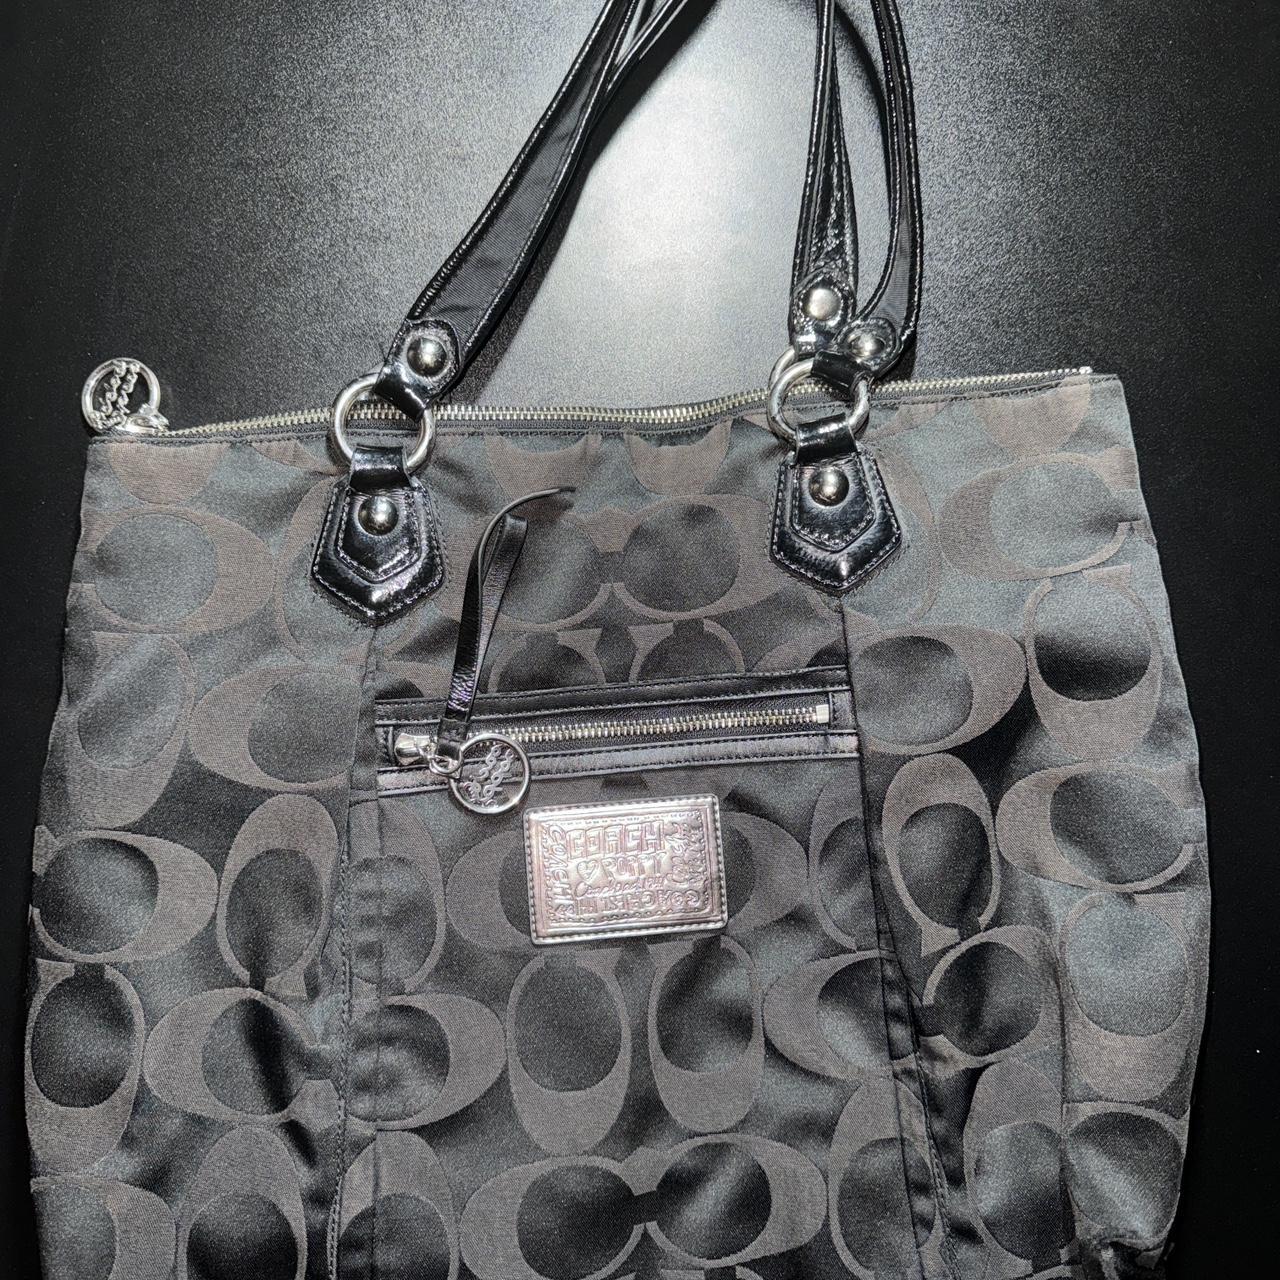 Coach Poppy Black Sequin Rocker Satchel 16339 | Black leather handbags,  Patent leather bag, Black leather satchel